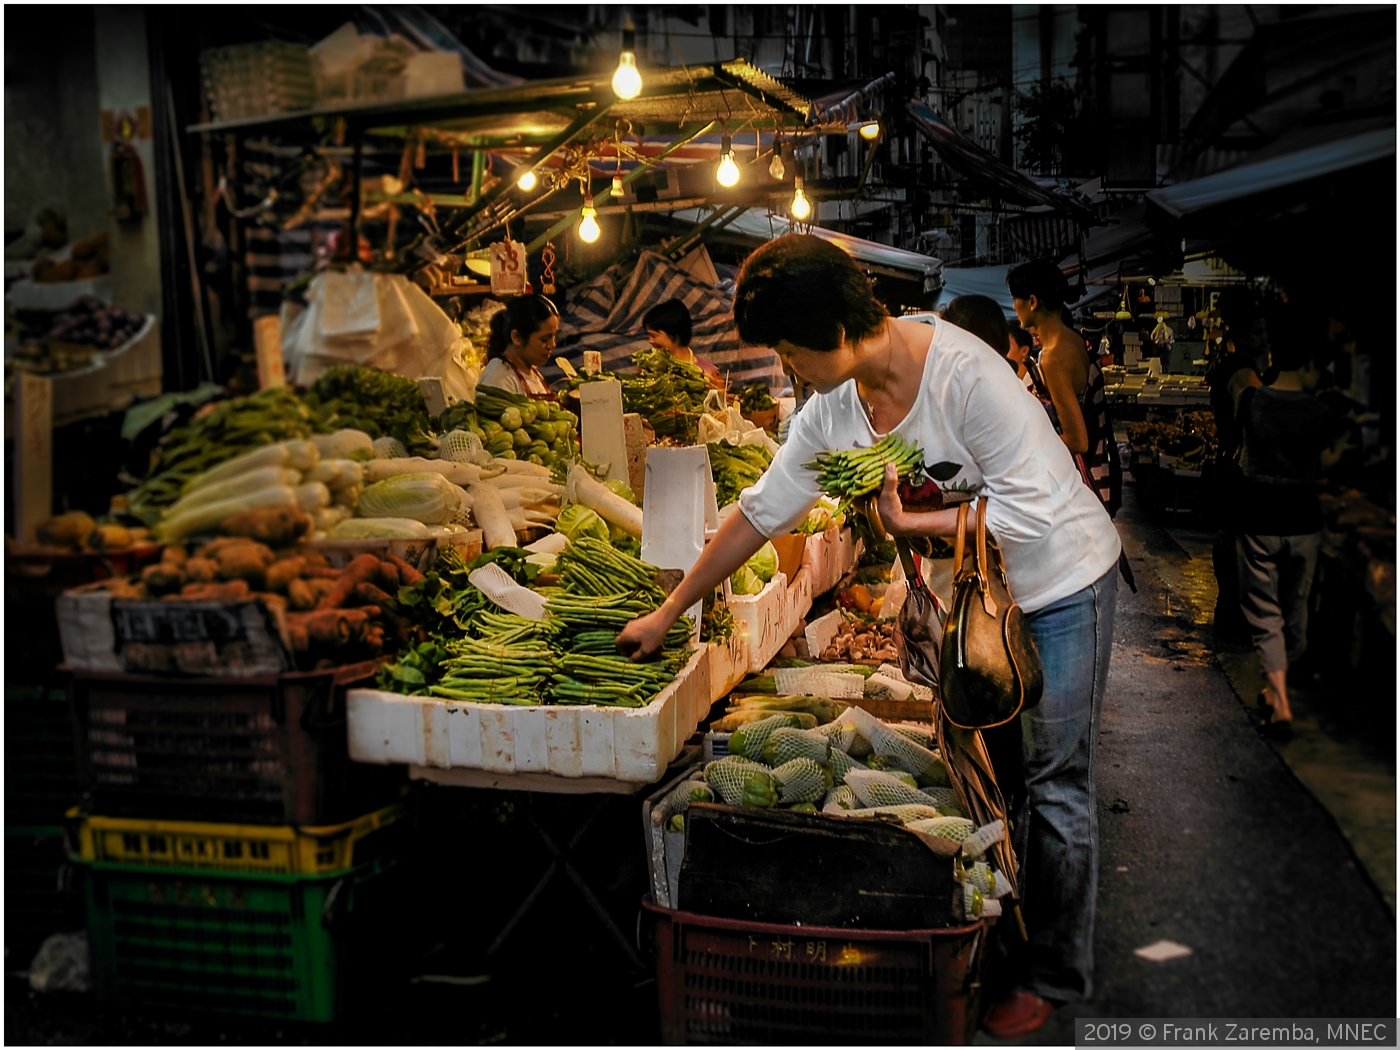 Night Market Bean Buyer - Hong Kong by Frank Zaremba, MNEC